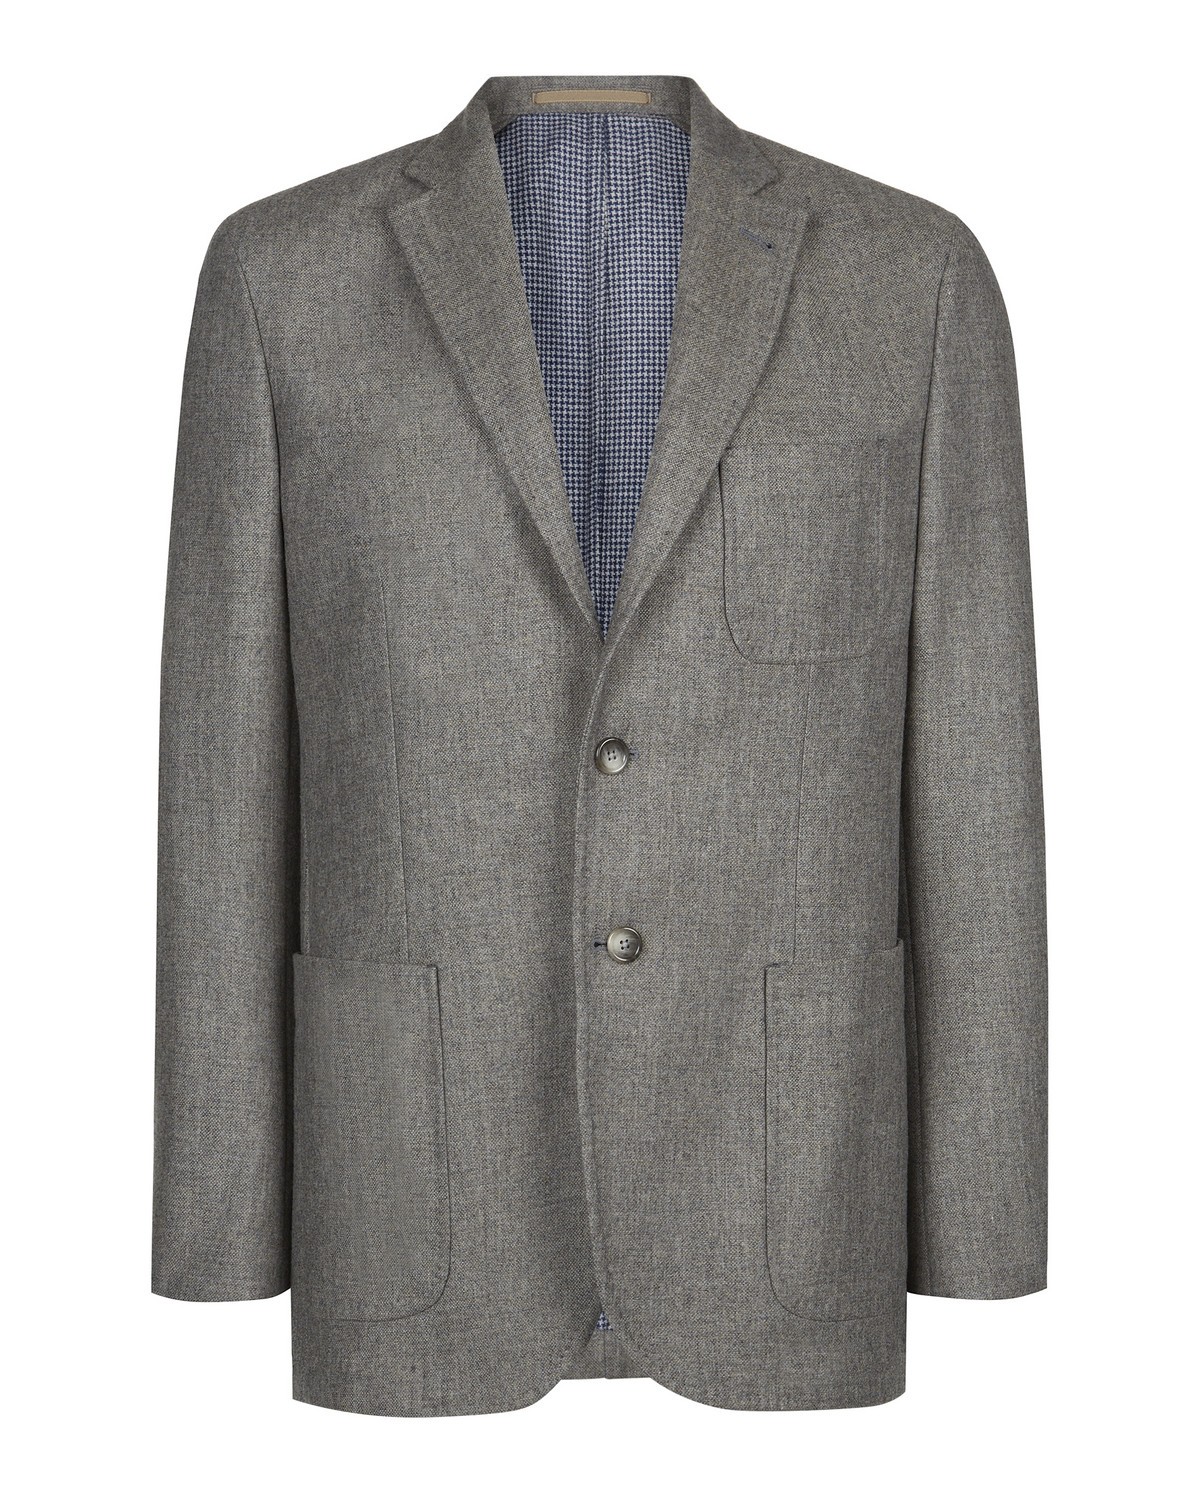 The solid gray odd jacket | Styleforum